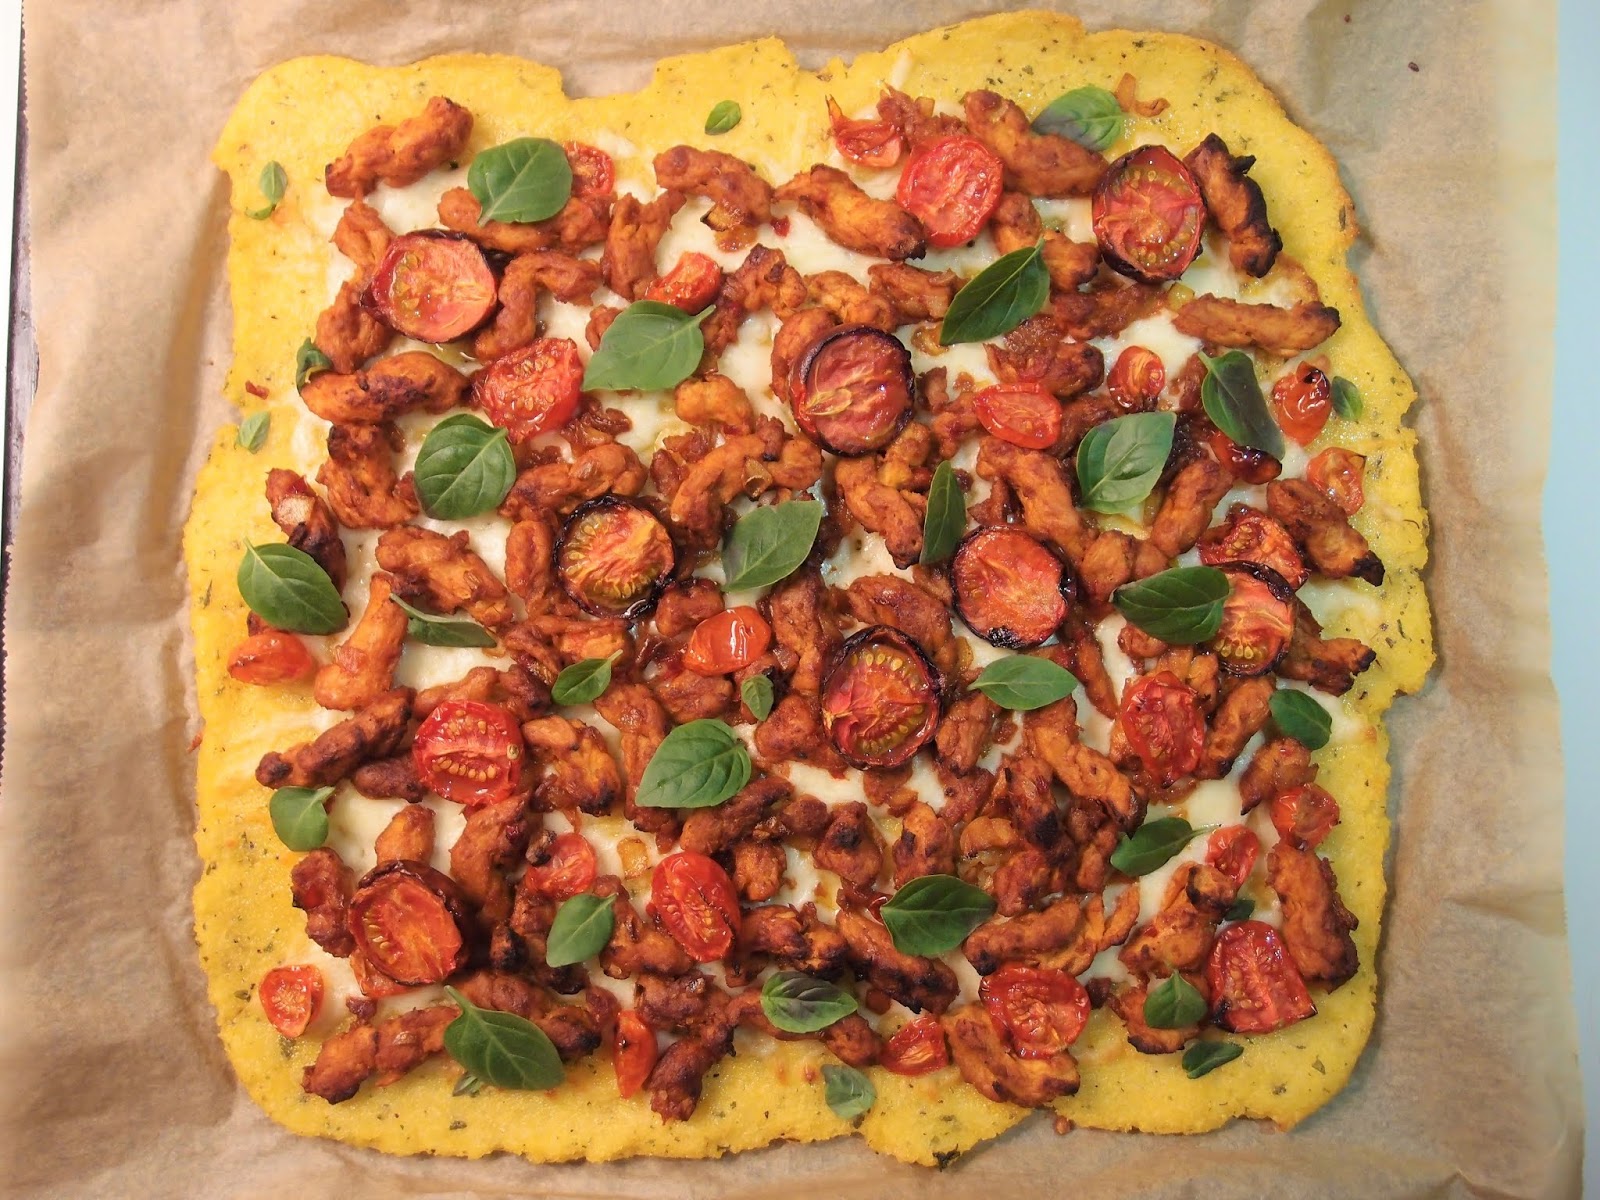 The VegHog: Spicy polenta pizza